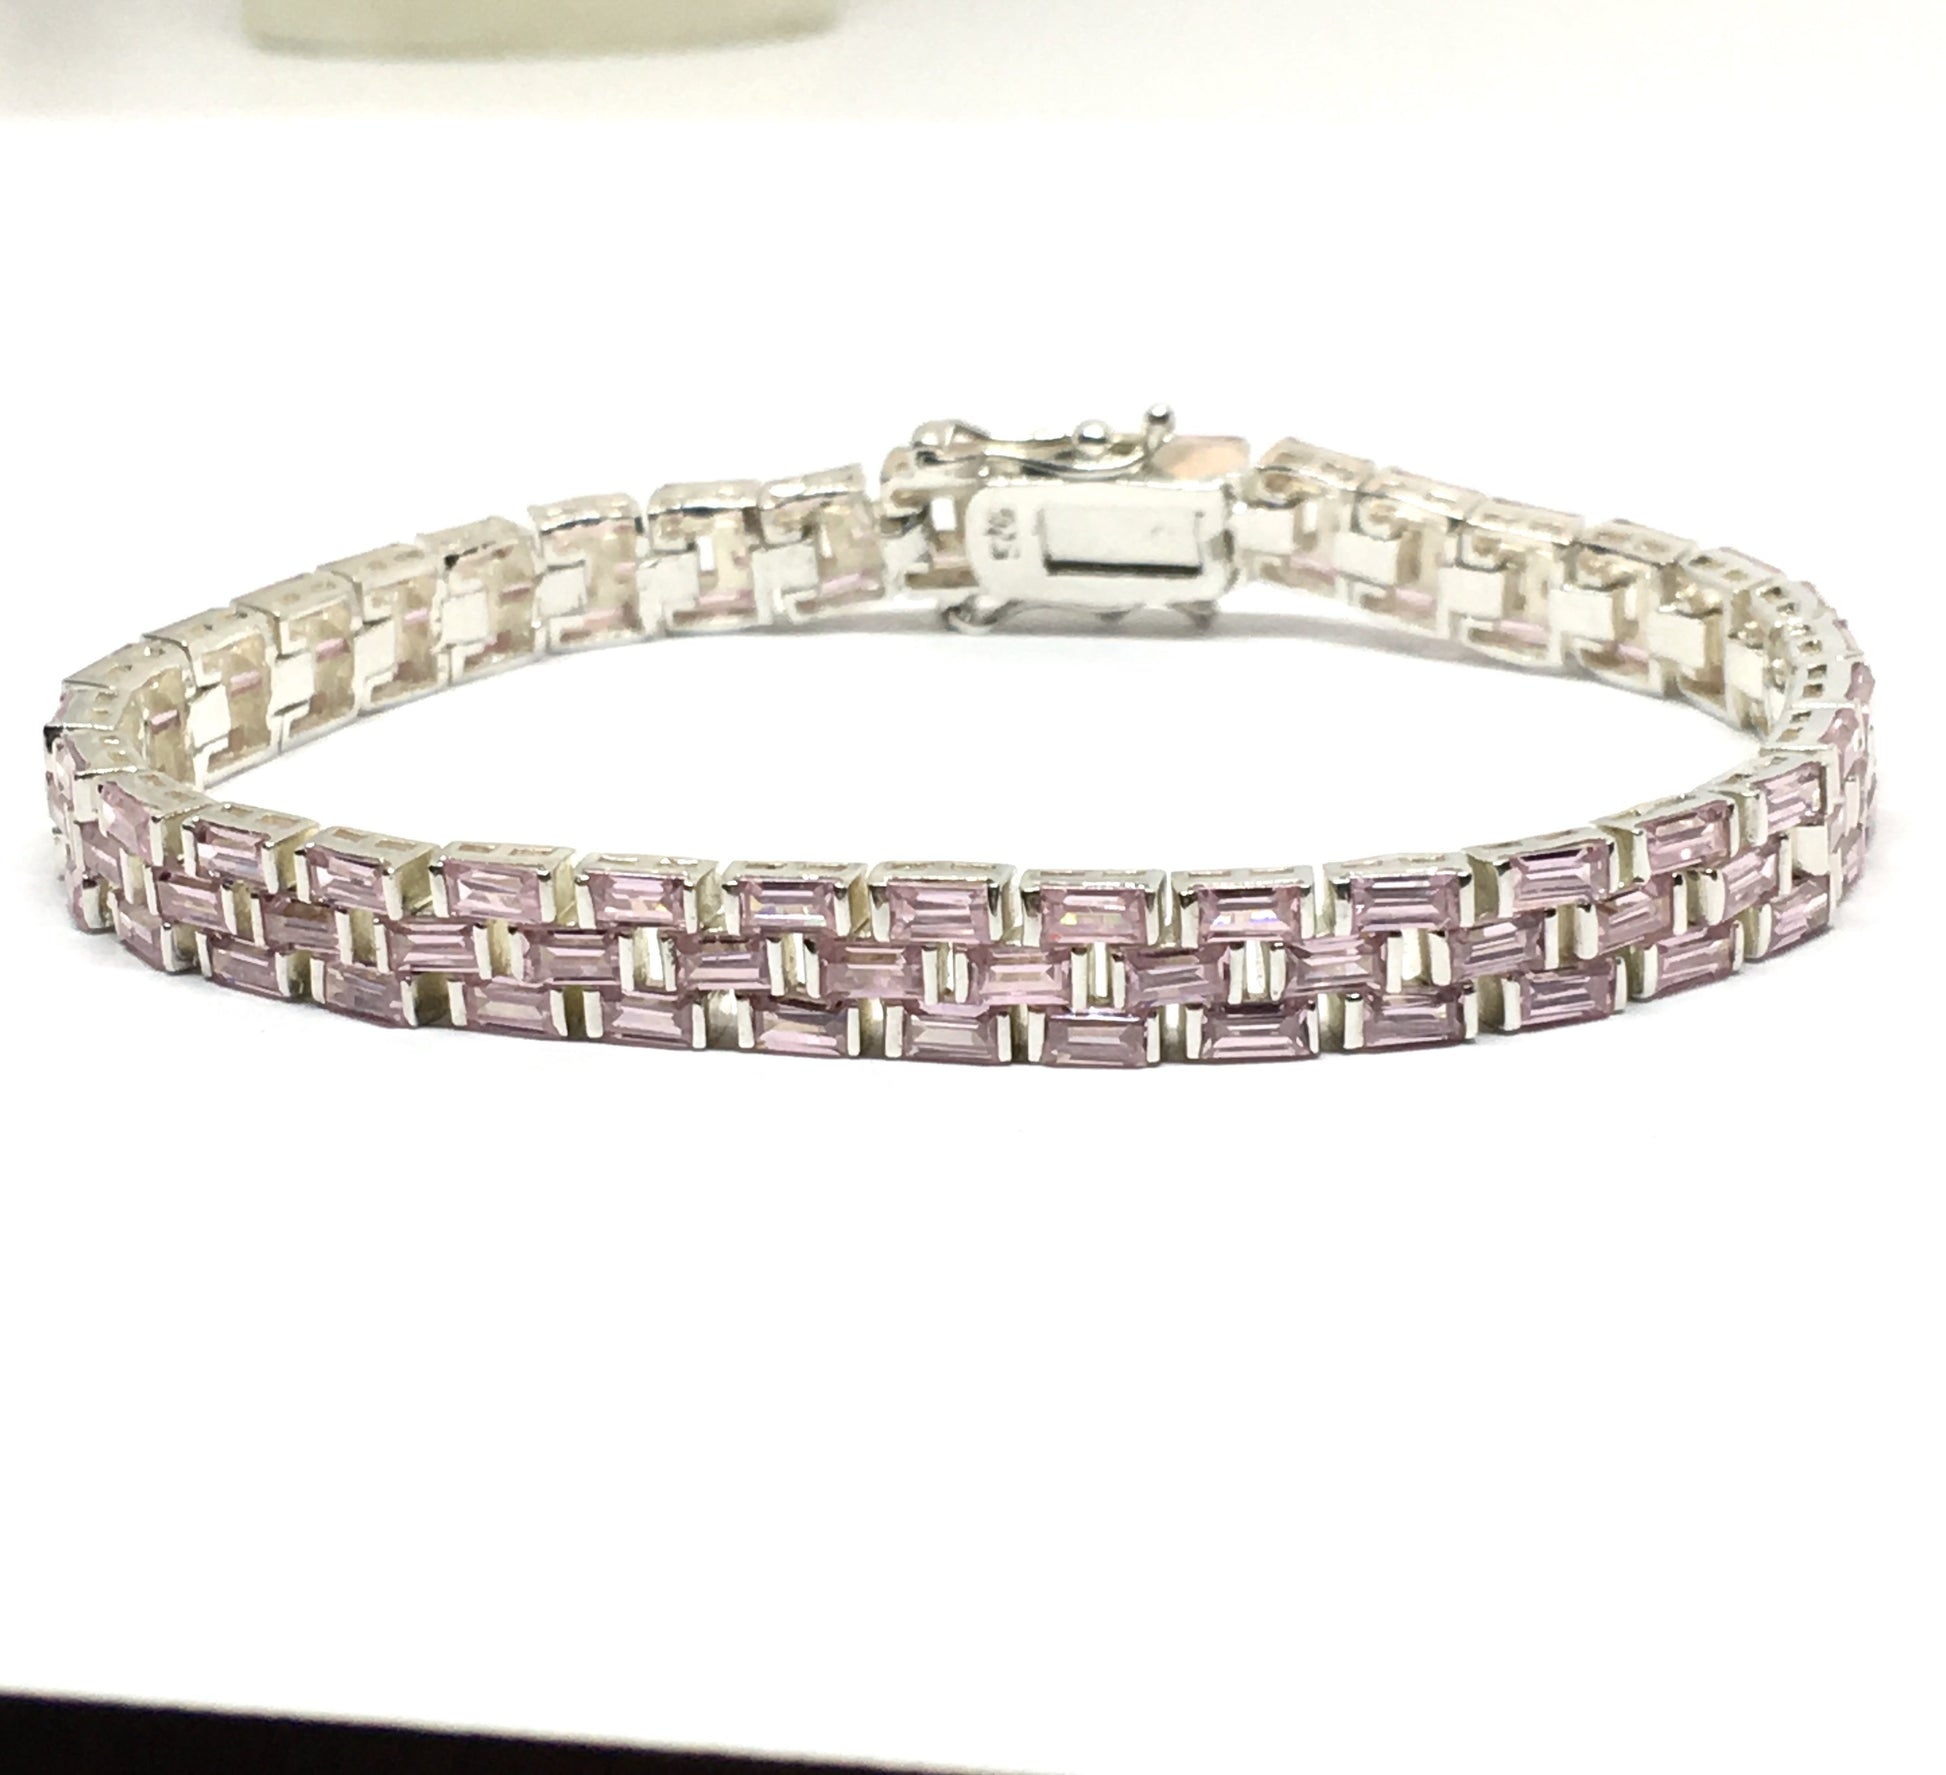 Bracelet - Sterling Silver Pink Tennis Bracelet - Women's Sparkling Cz Stone Bracelet - Statement Jewelry - Cocktail Bracelet